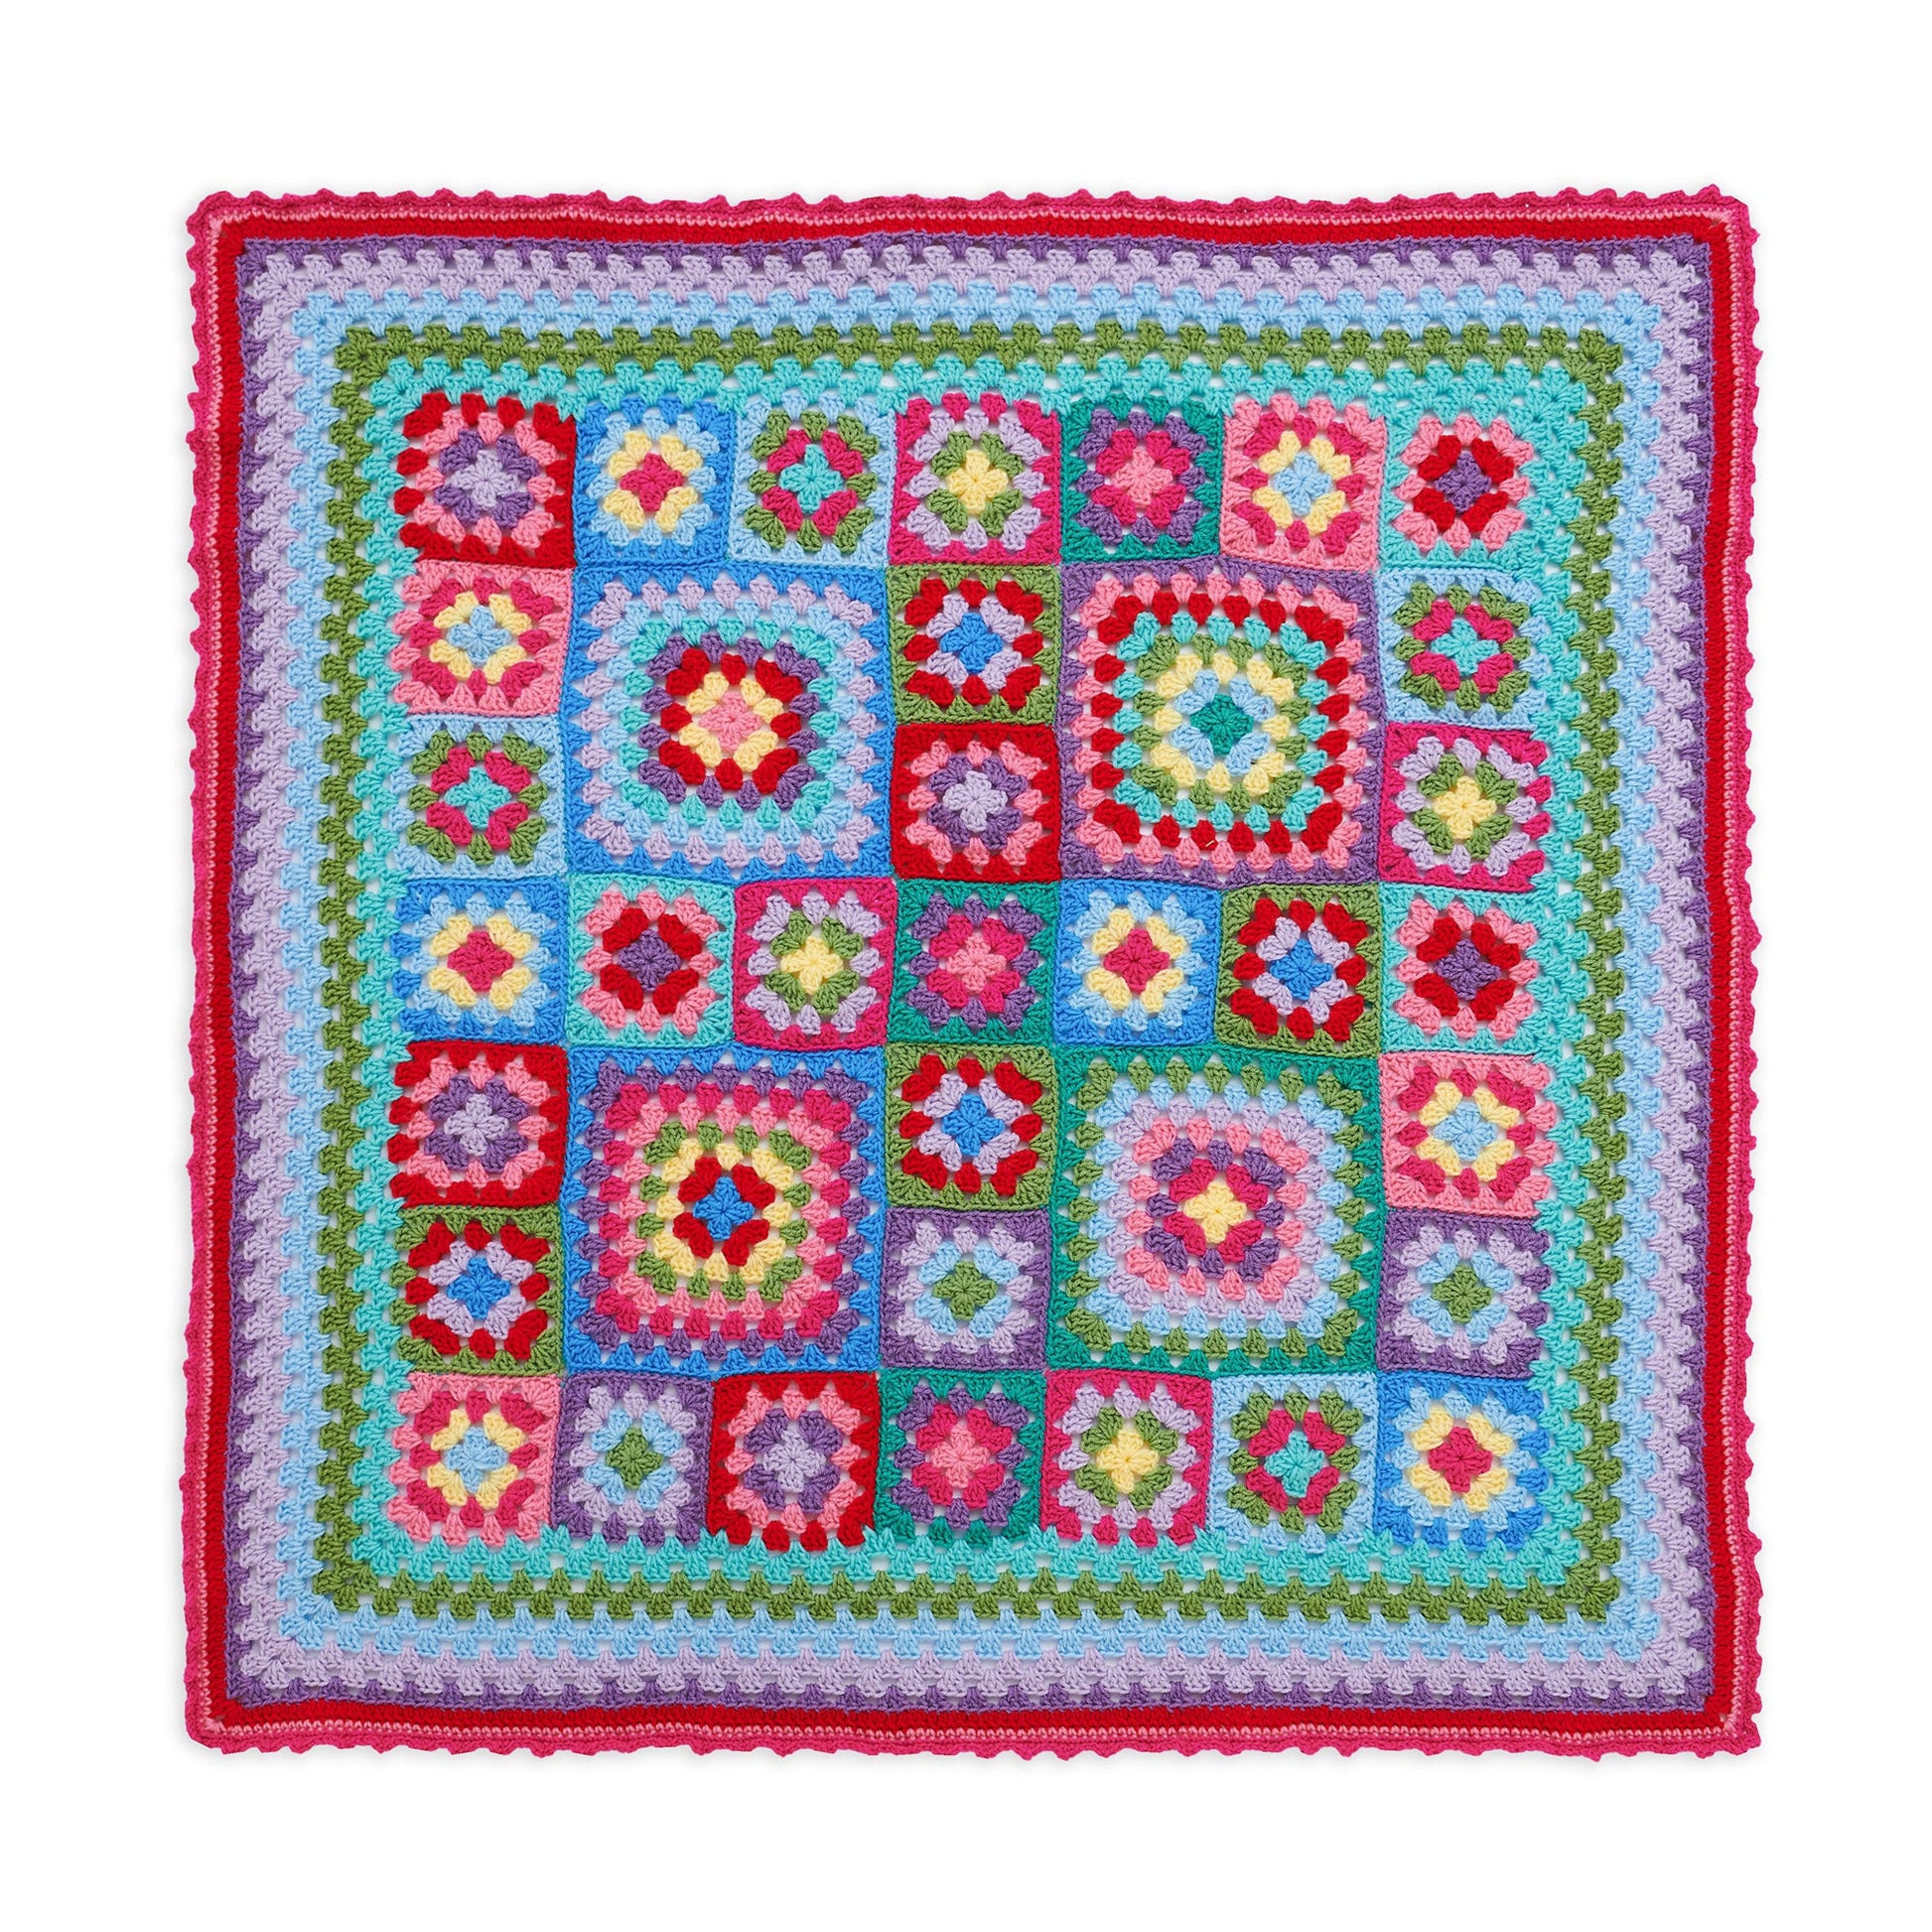 Red Heart Crochet Book J27 0031 Granny Squares Super Saver